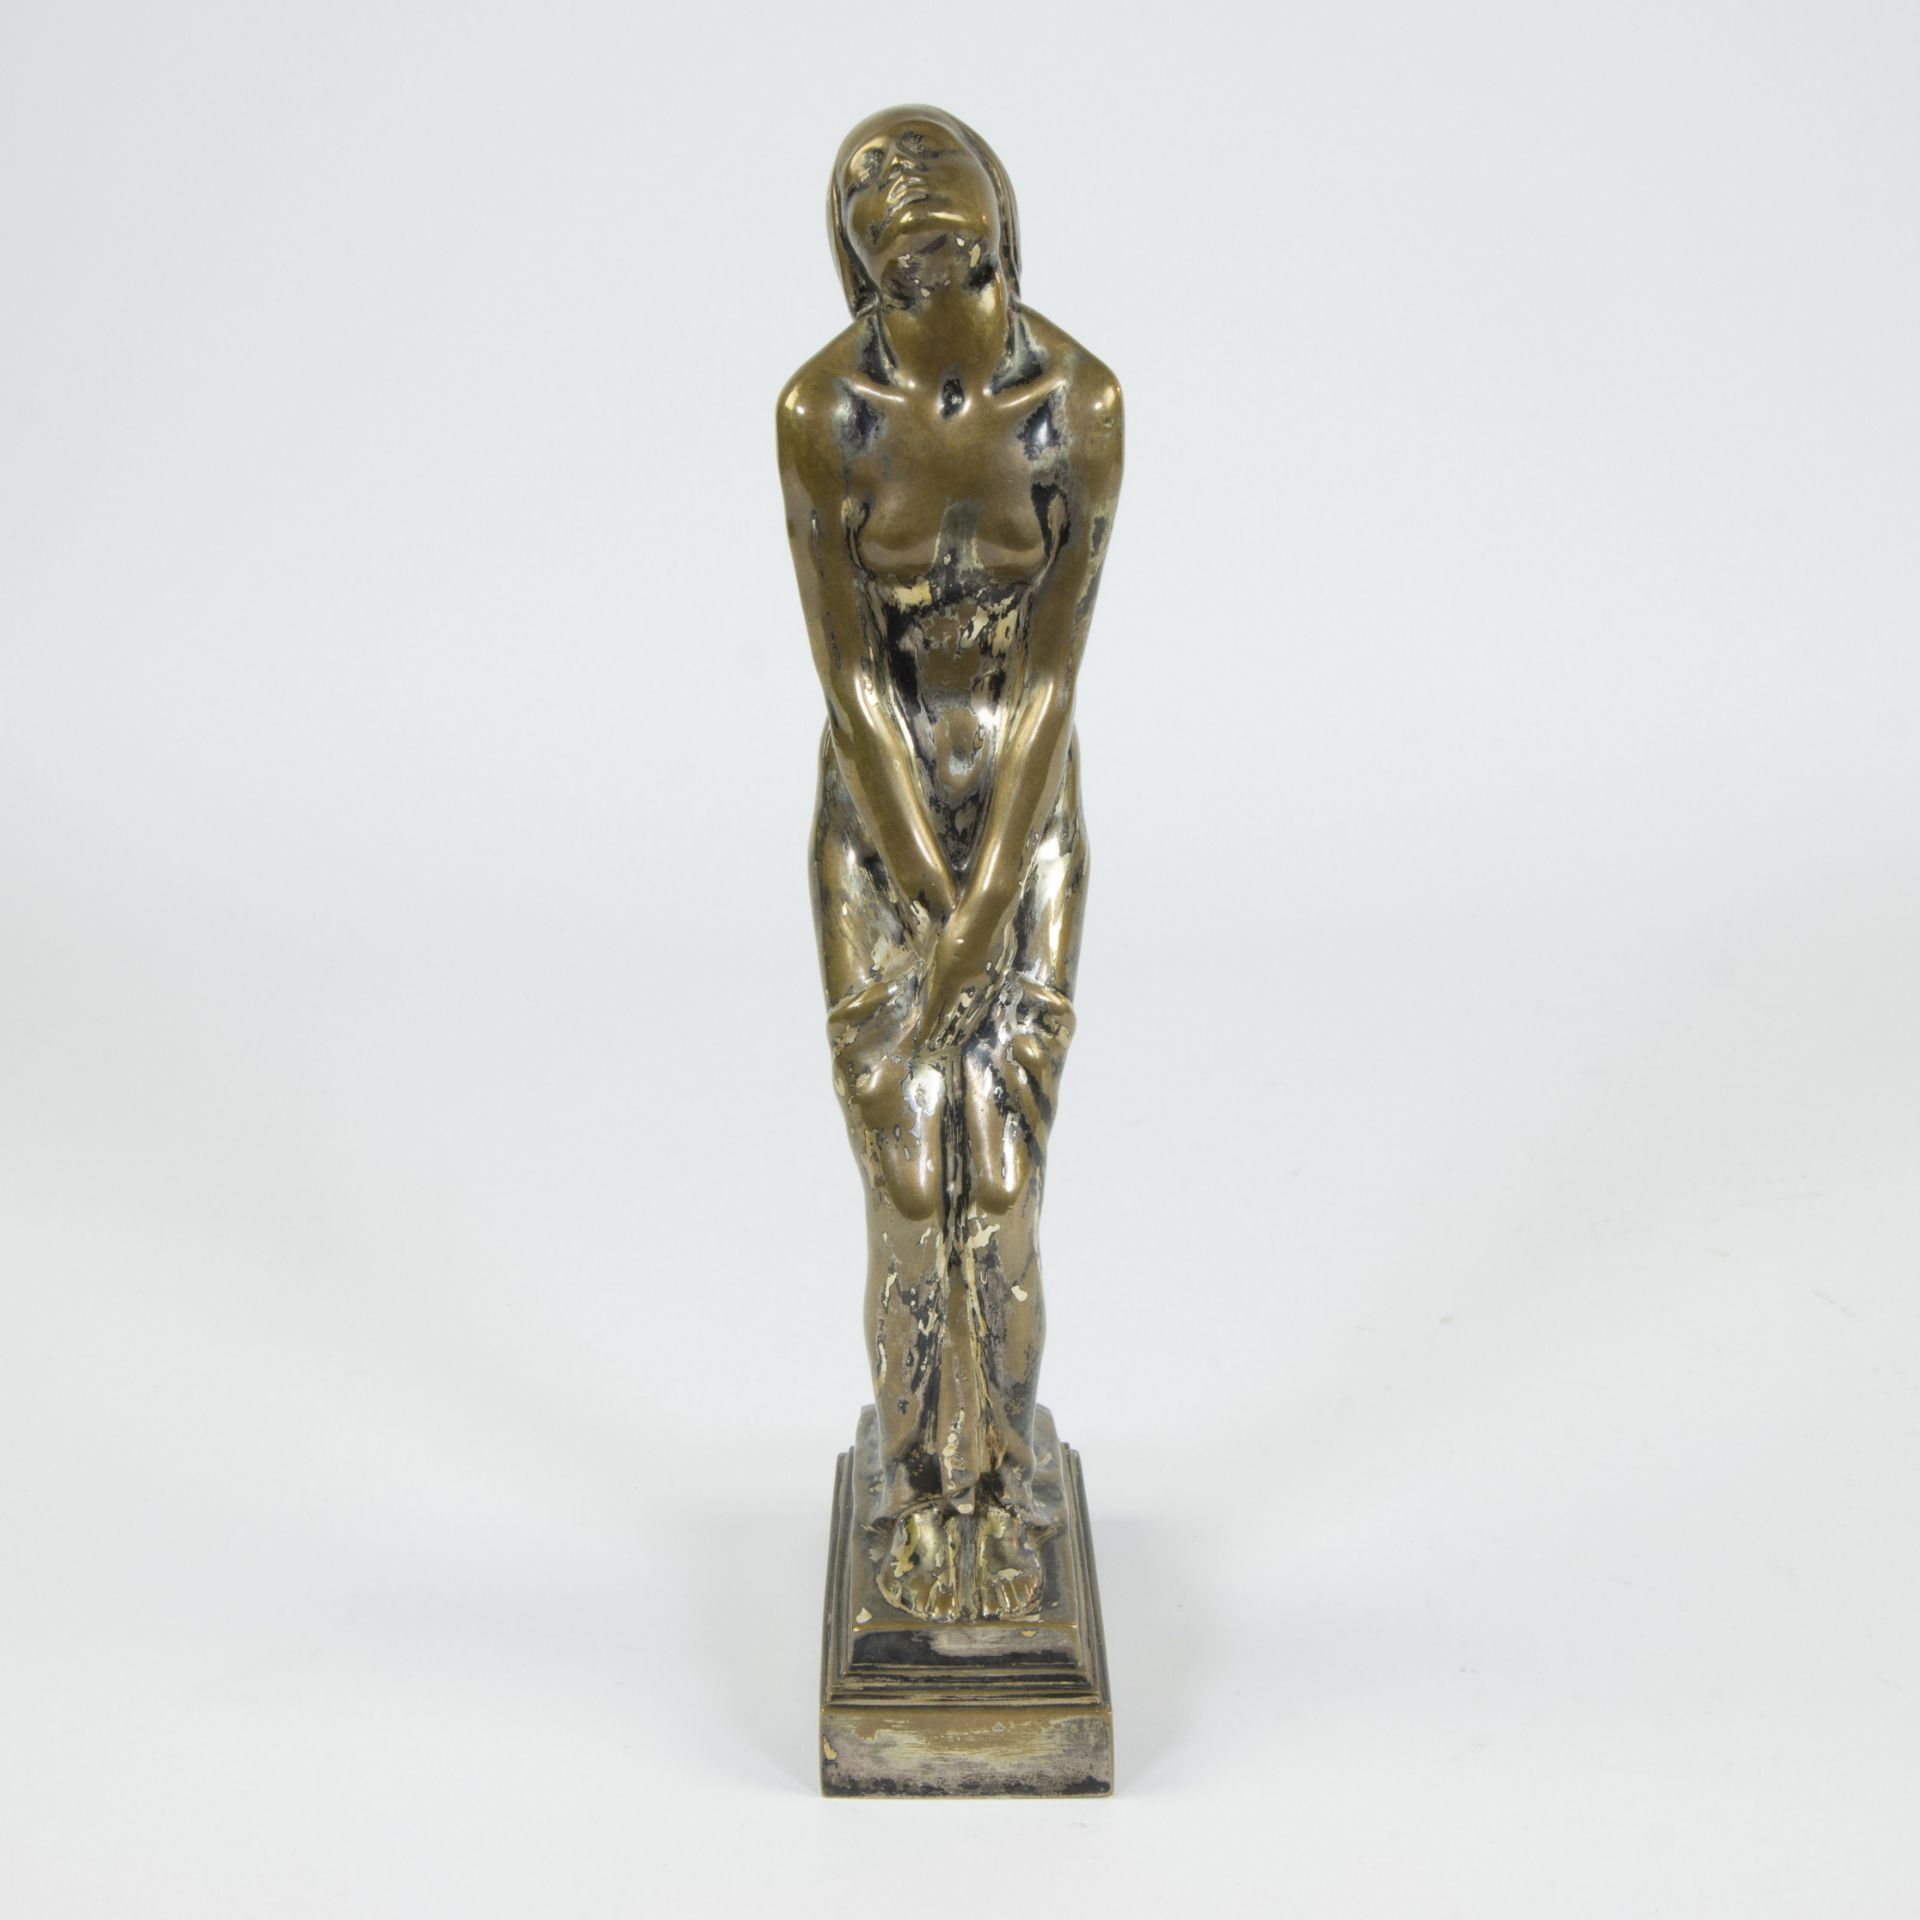 Geo VERBANCK (1881-1961), bronze sculpture 'Le désir', signed - Image 2 of 6